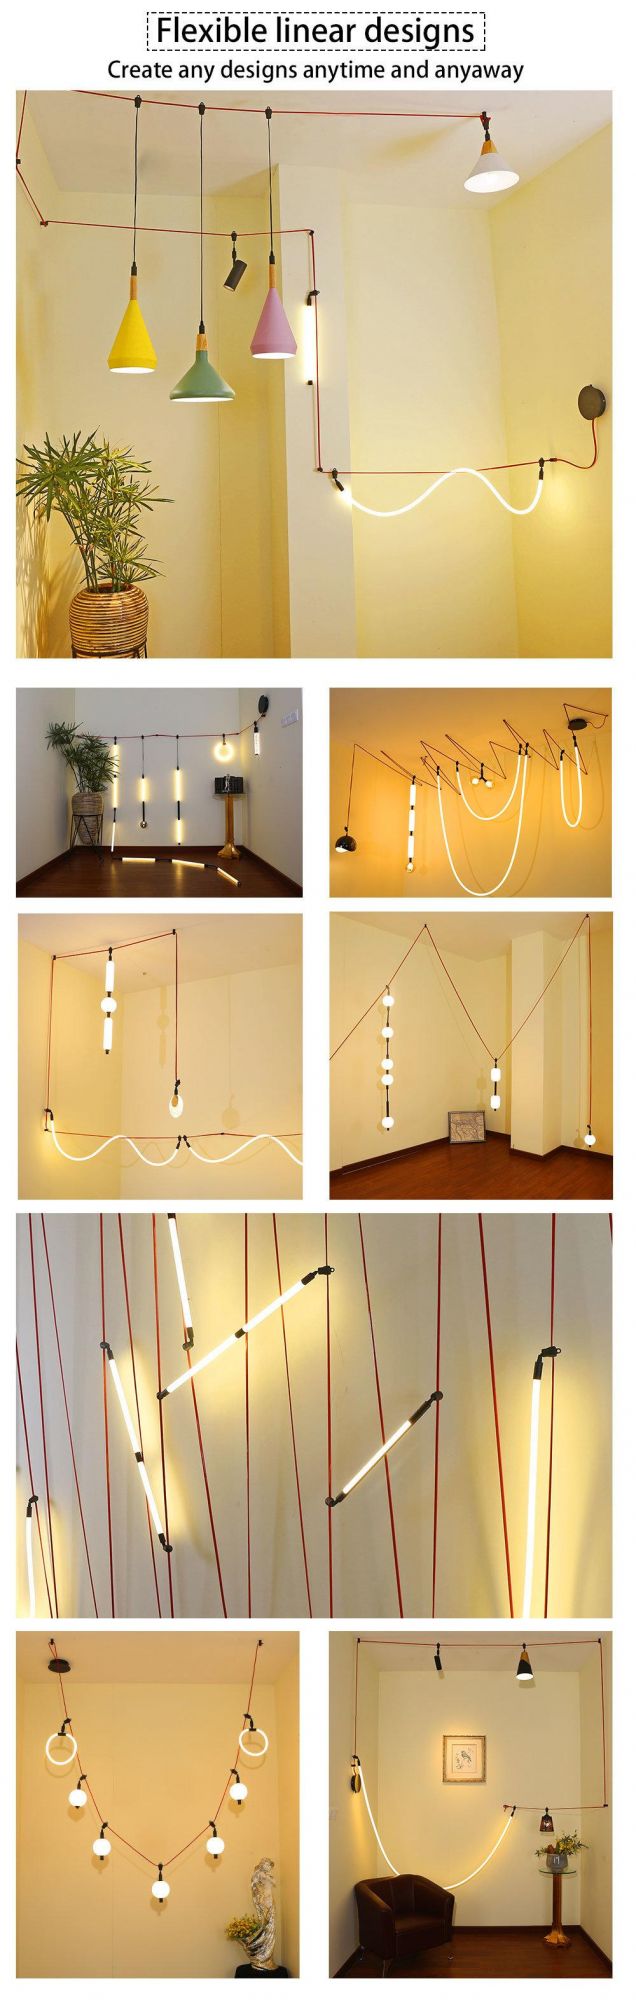 LED Indoor Lighting Designer Flexible Linear 3000K/6000K Glass Acrylic Shade Decoration Chandelier Pendant Ceiling Spot Track Lamp Light